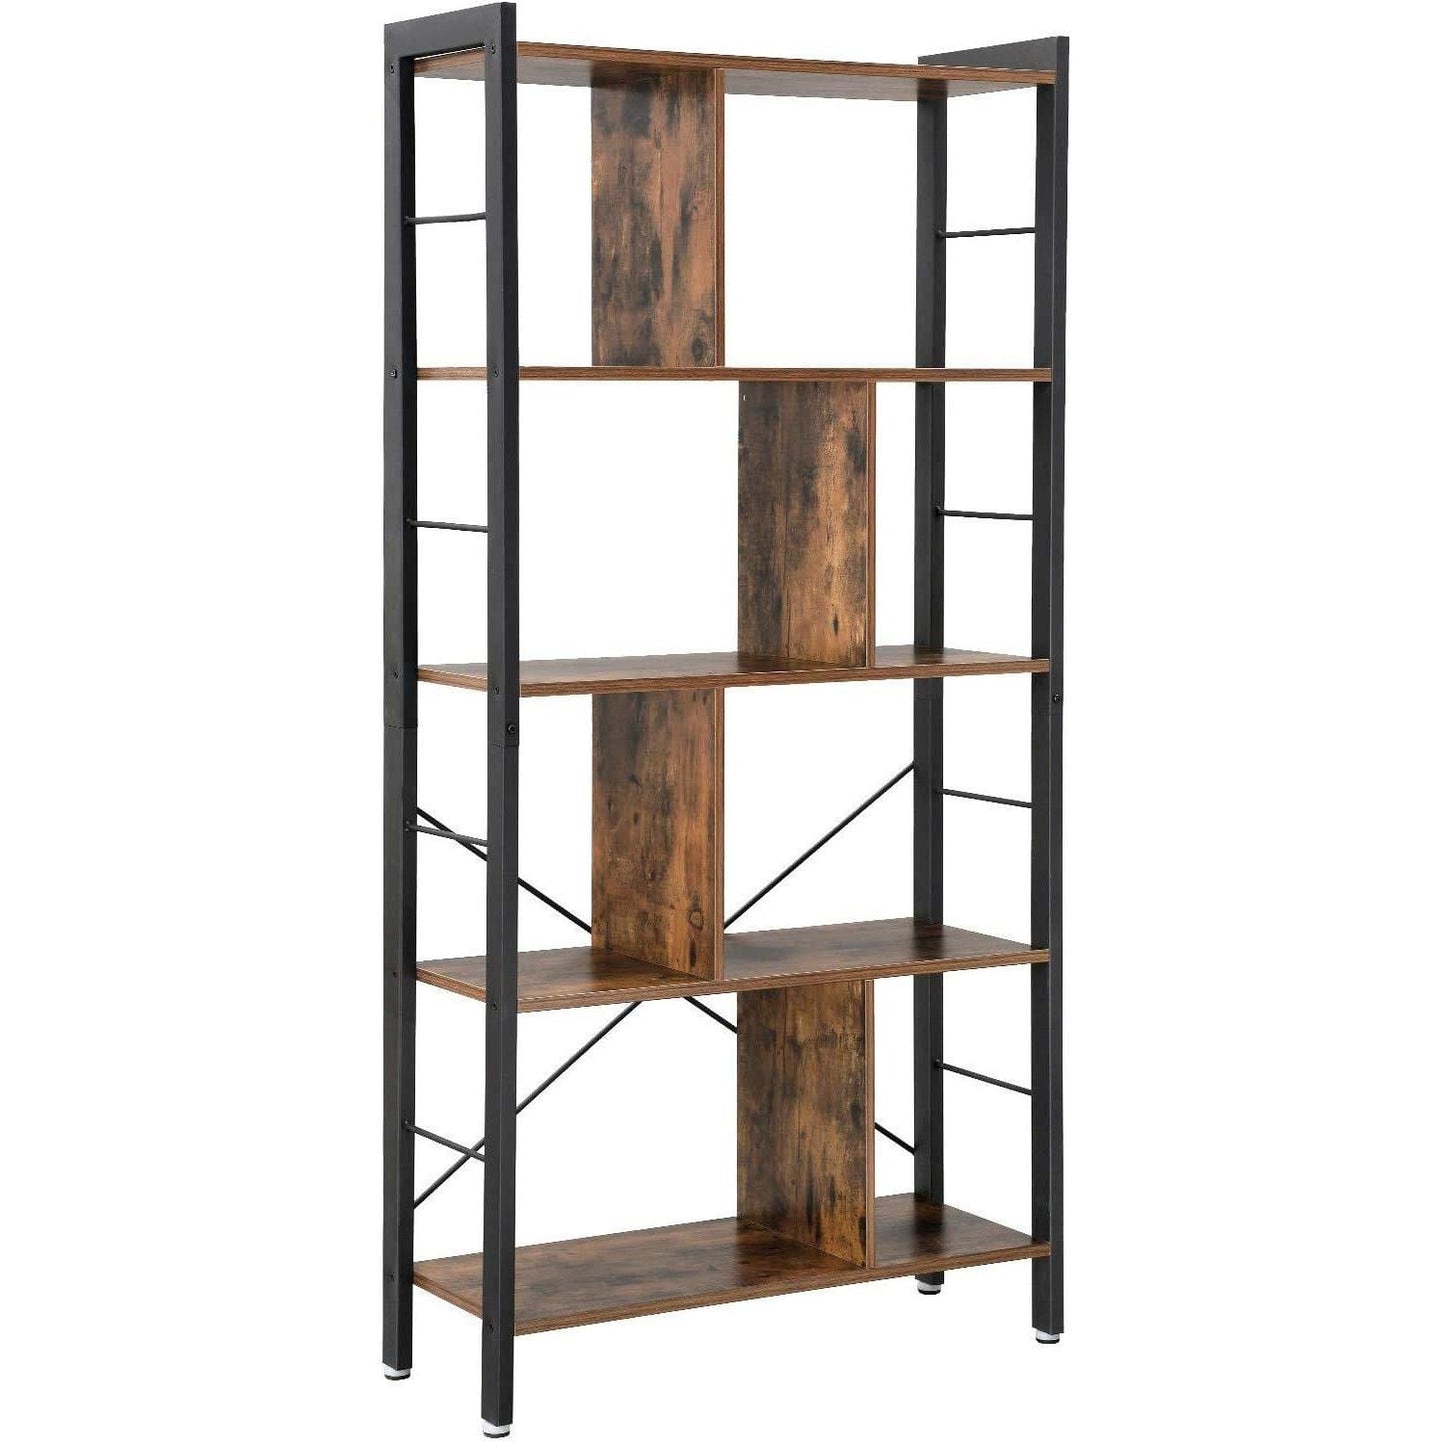 Nancy's Pasco Bookshelf - Bookcases - Industrial - Wood - Iron Frame - 74 x 30 x 154.5 cm (L x W x H)